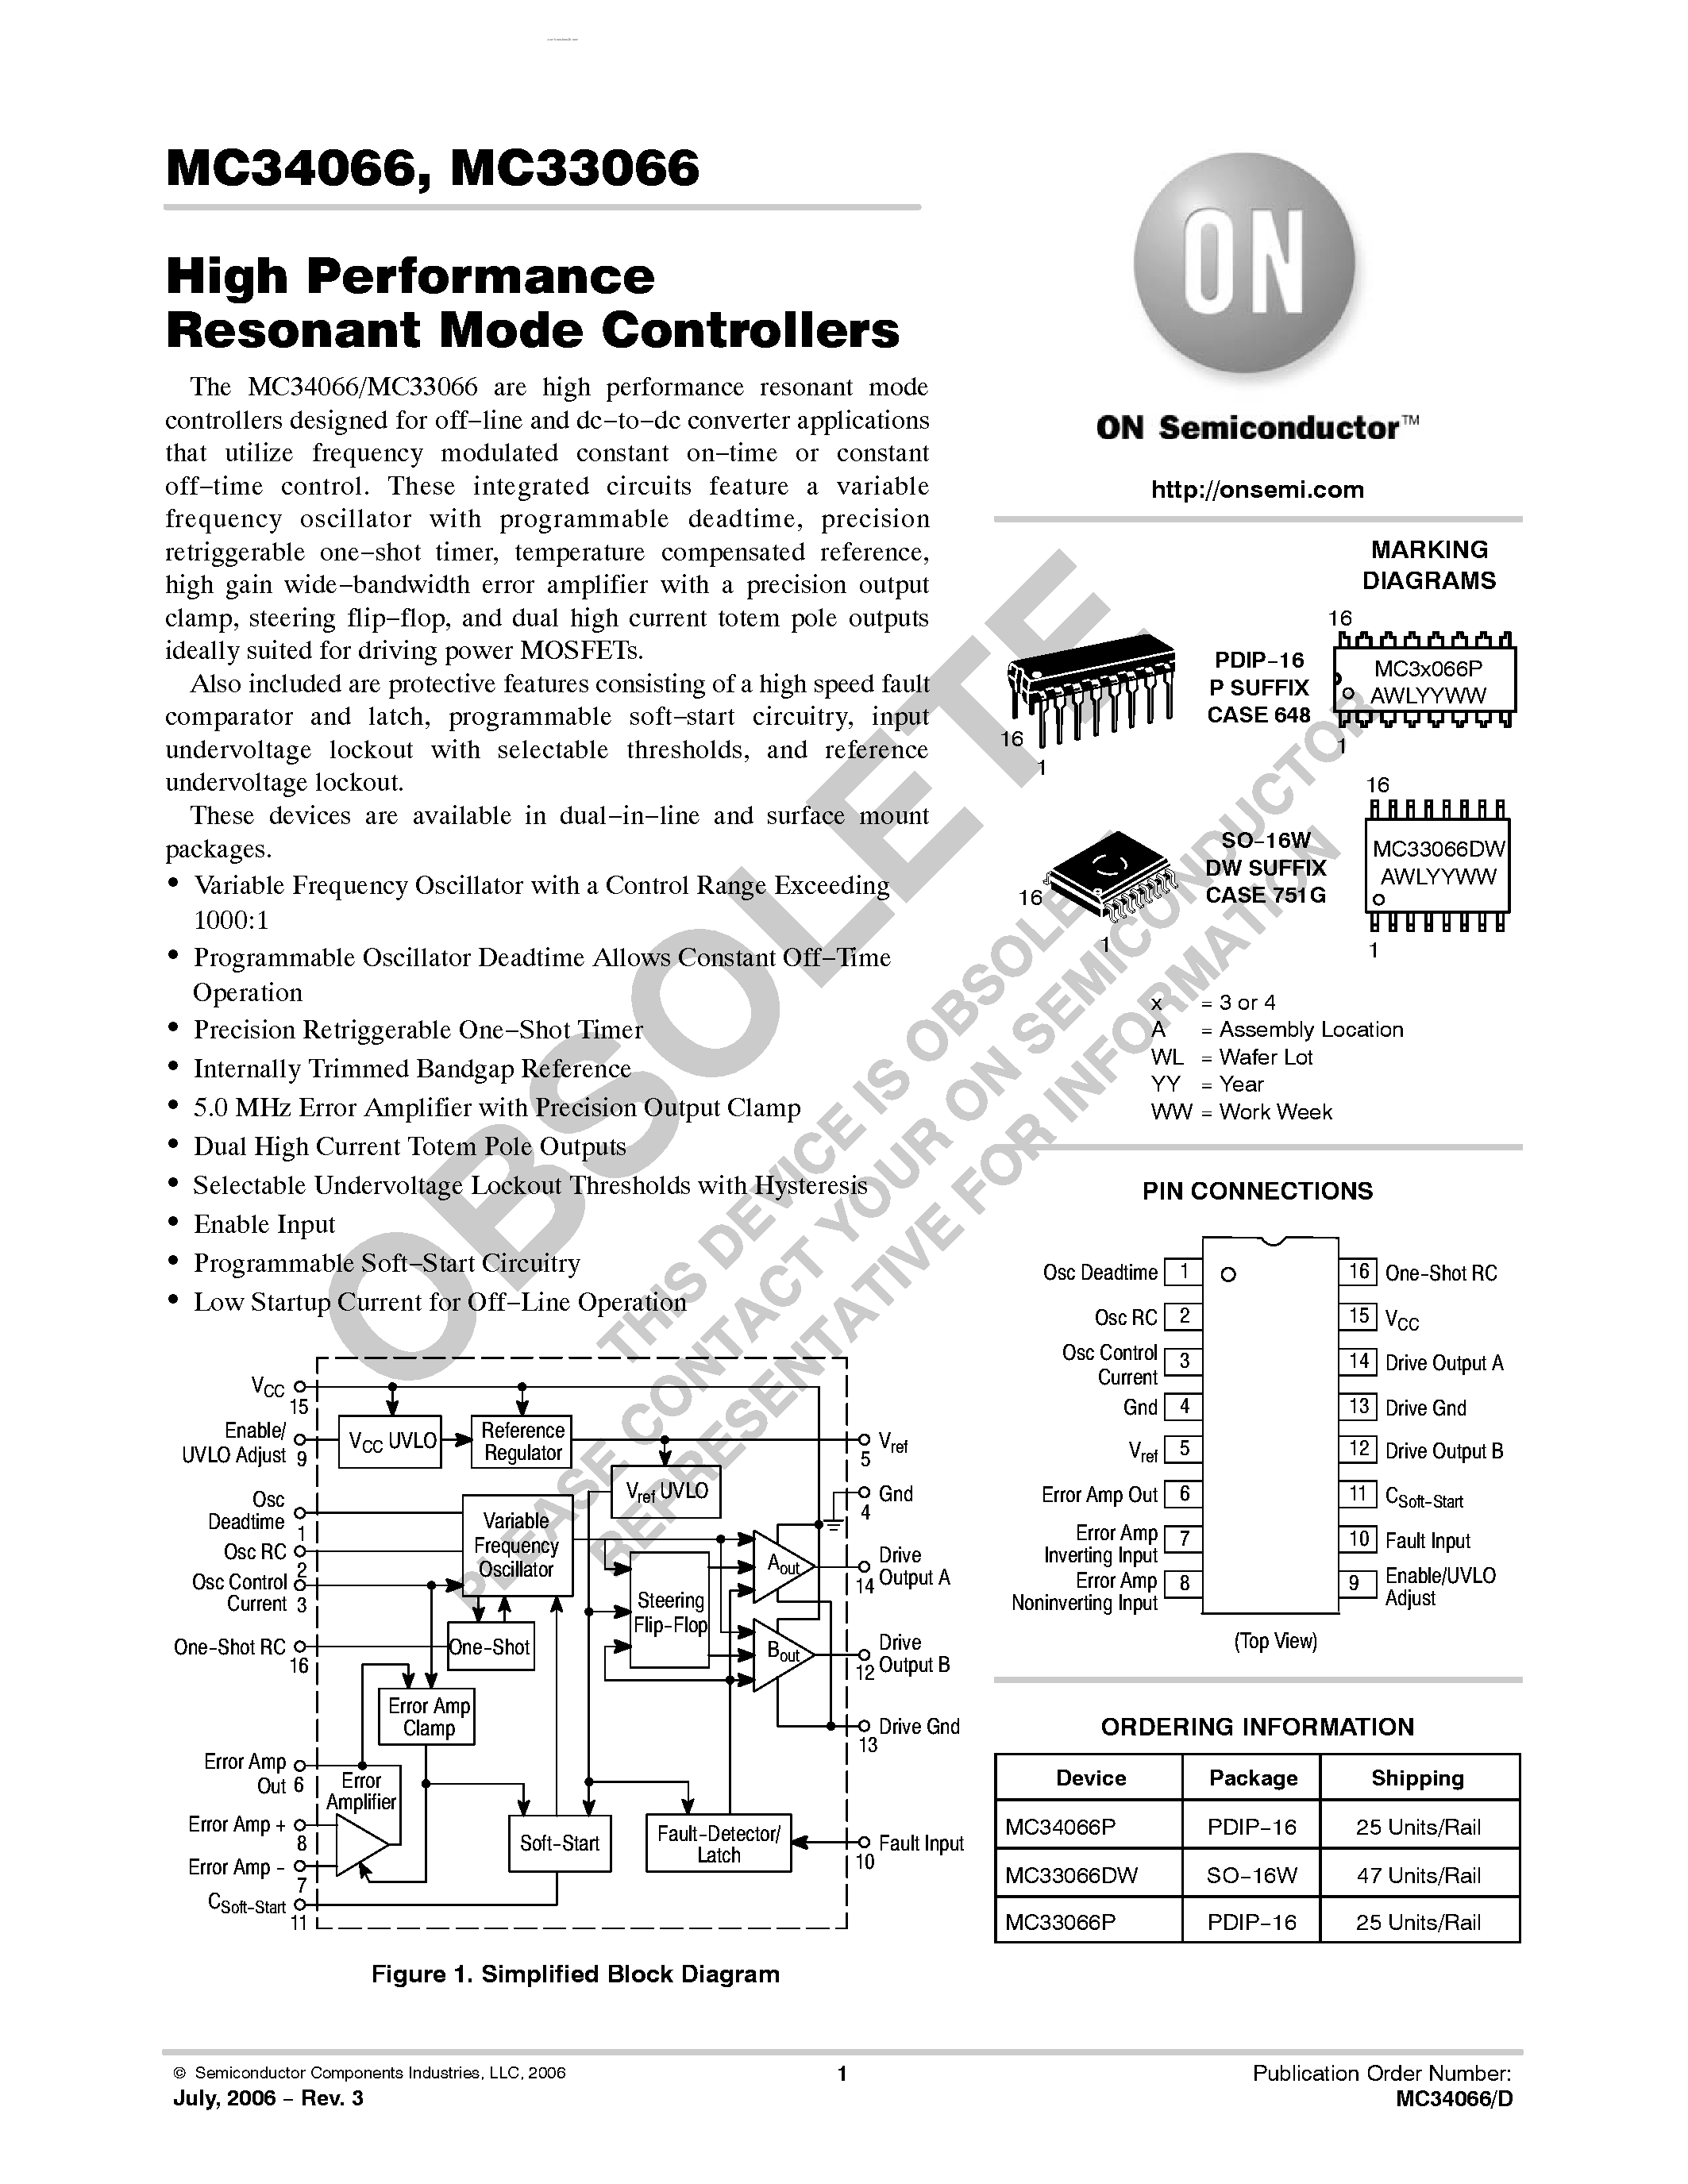 Datasheet MC33066 - (MC33066 / MC34066) High Performance High Performance page 1